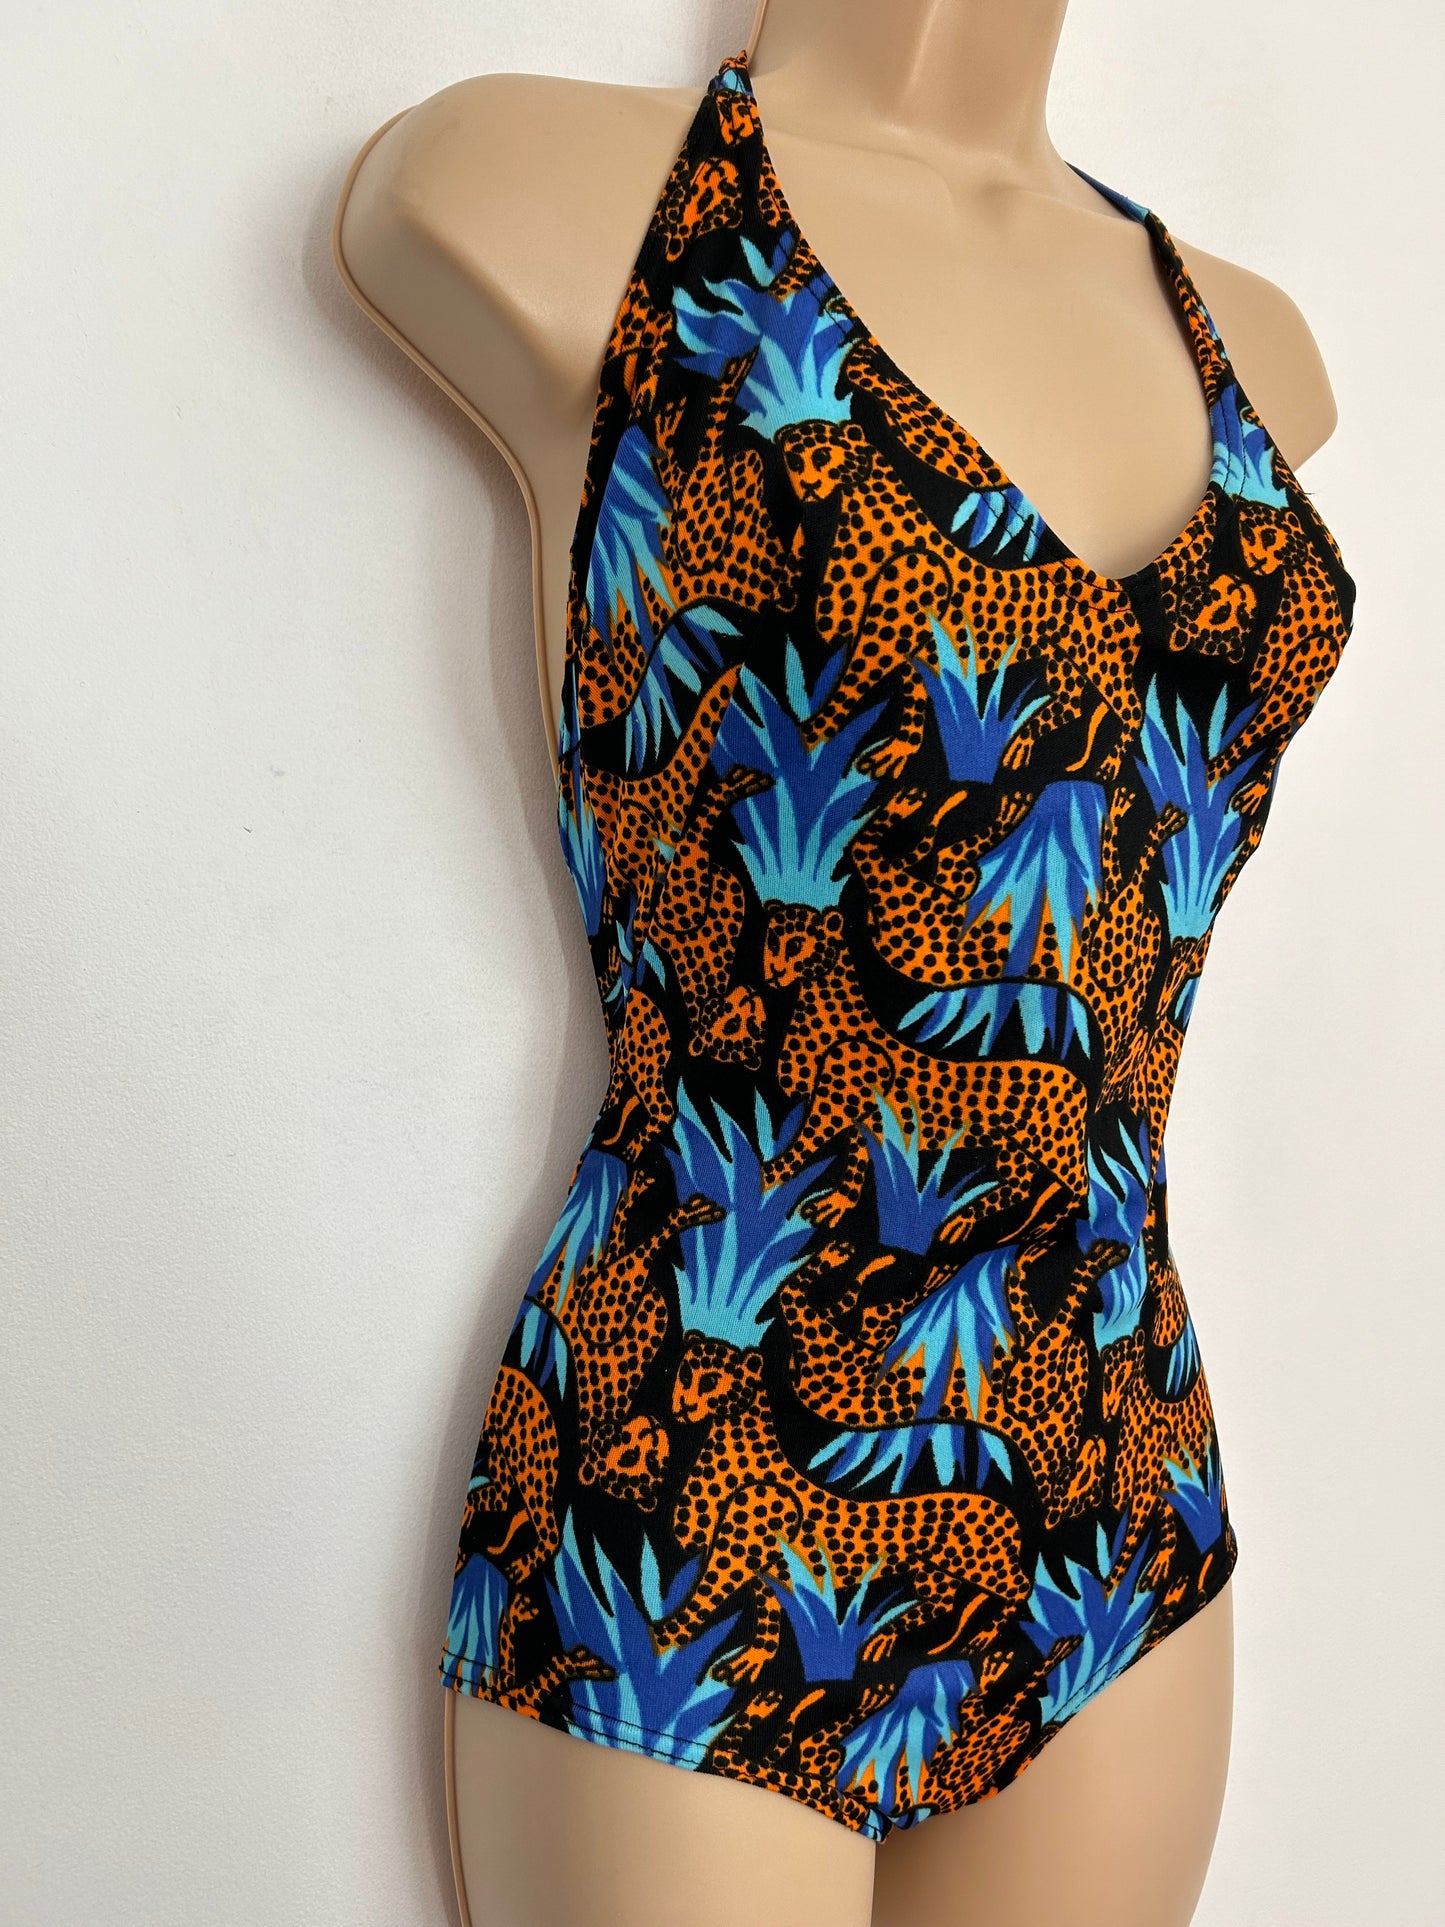 Vintage 1970s OLUBA UK Size 12-14 Blue Black & Orange Leopard Print Halter Neck Swimsuit Bathing Costume